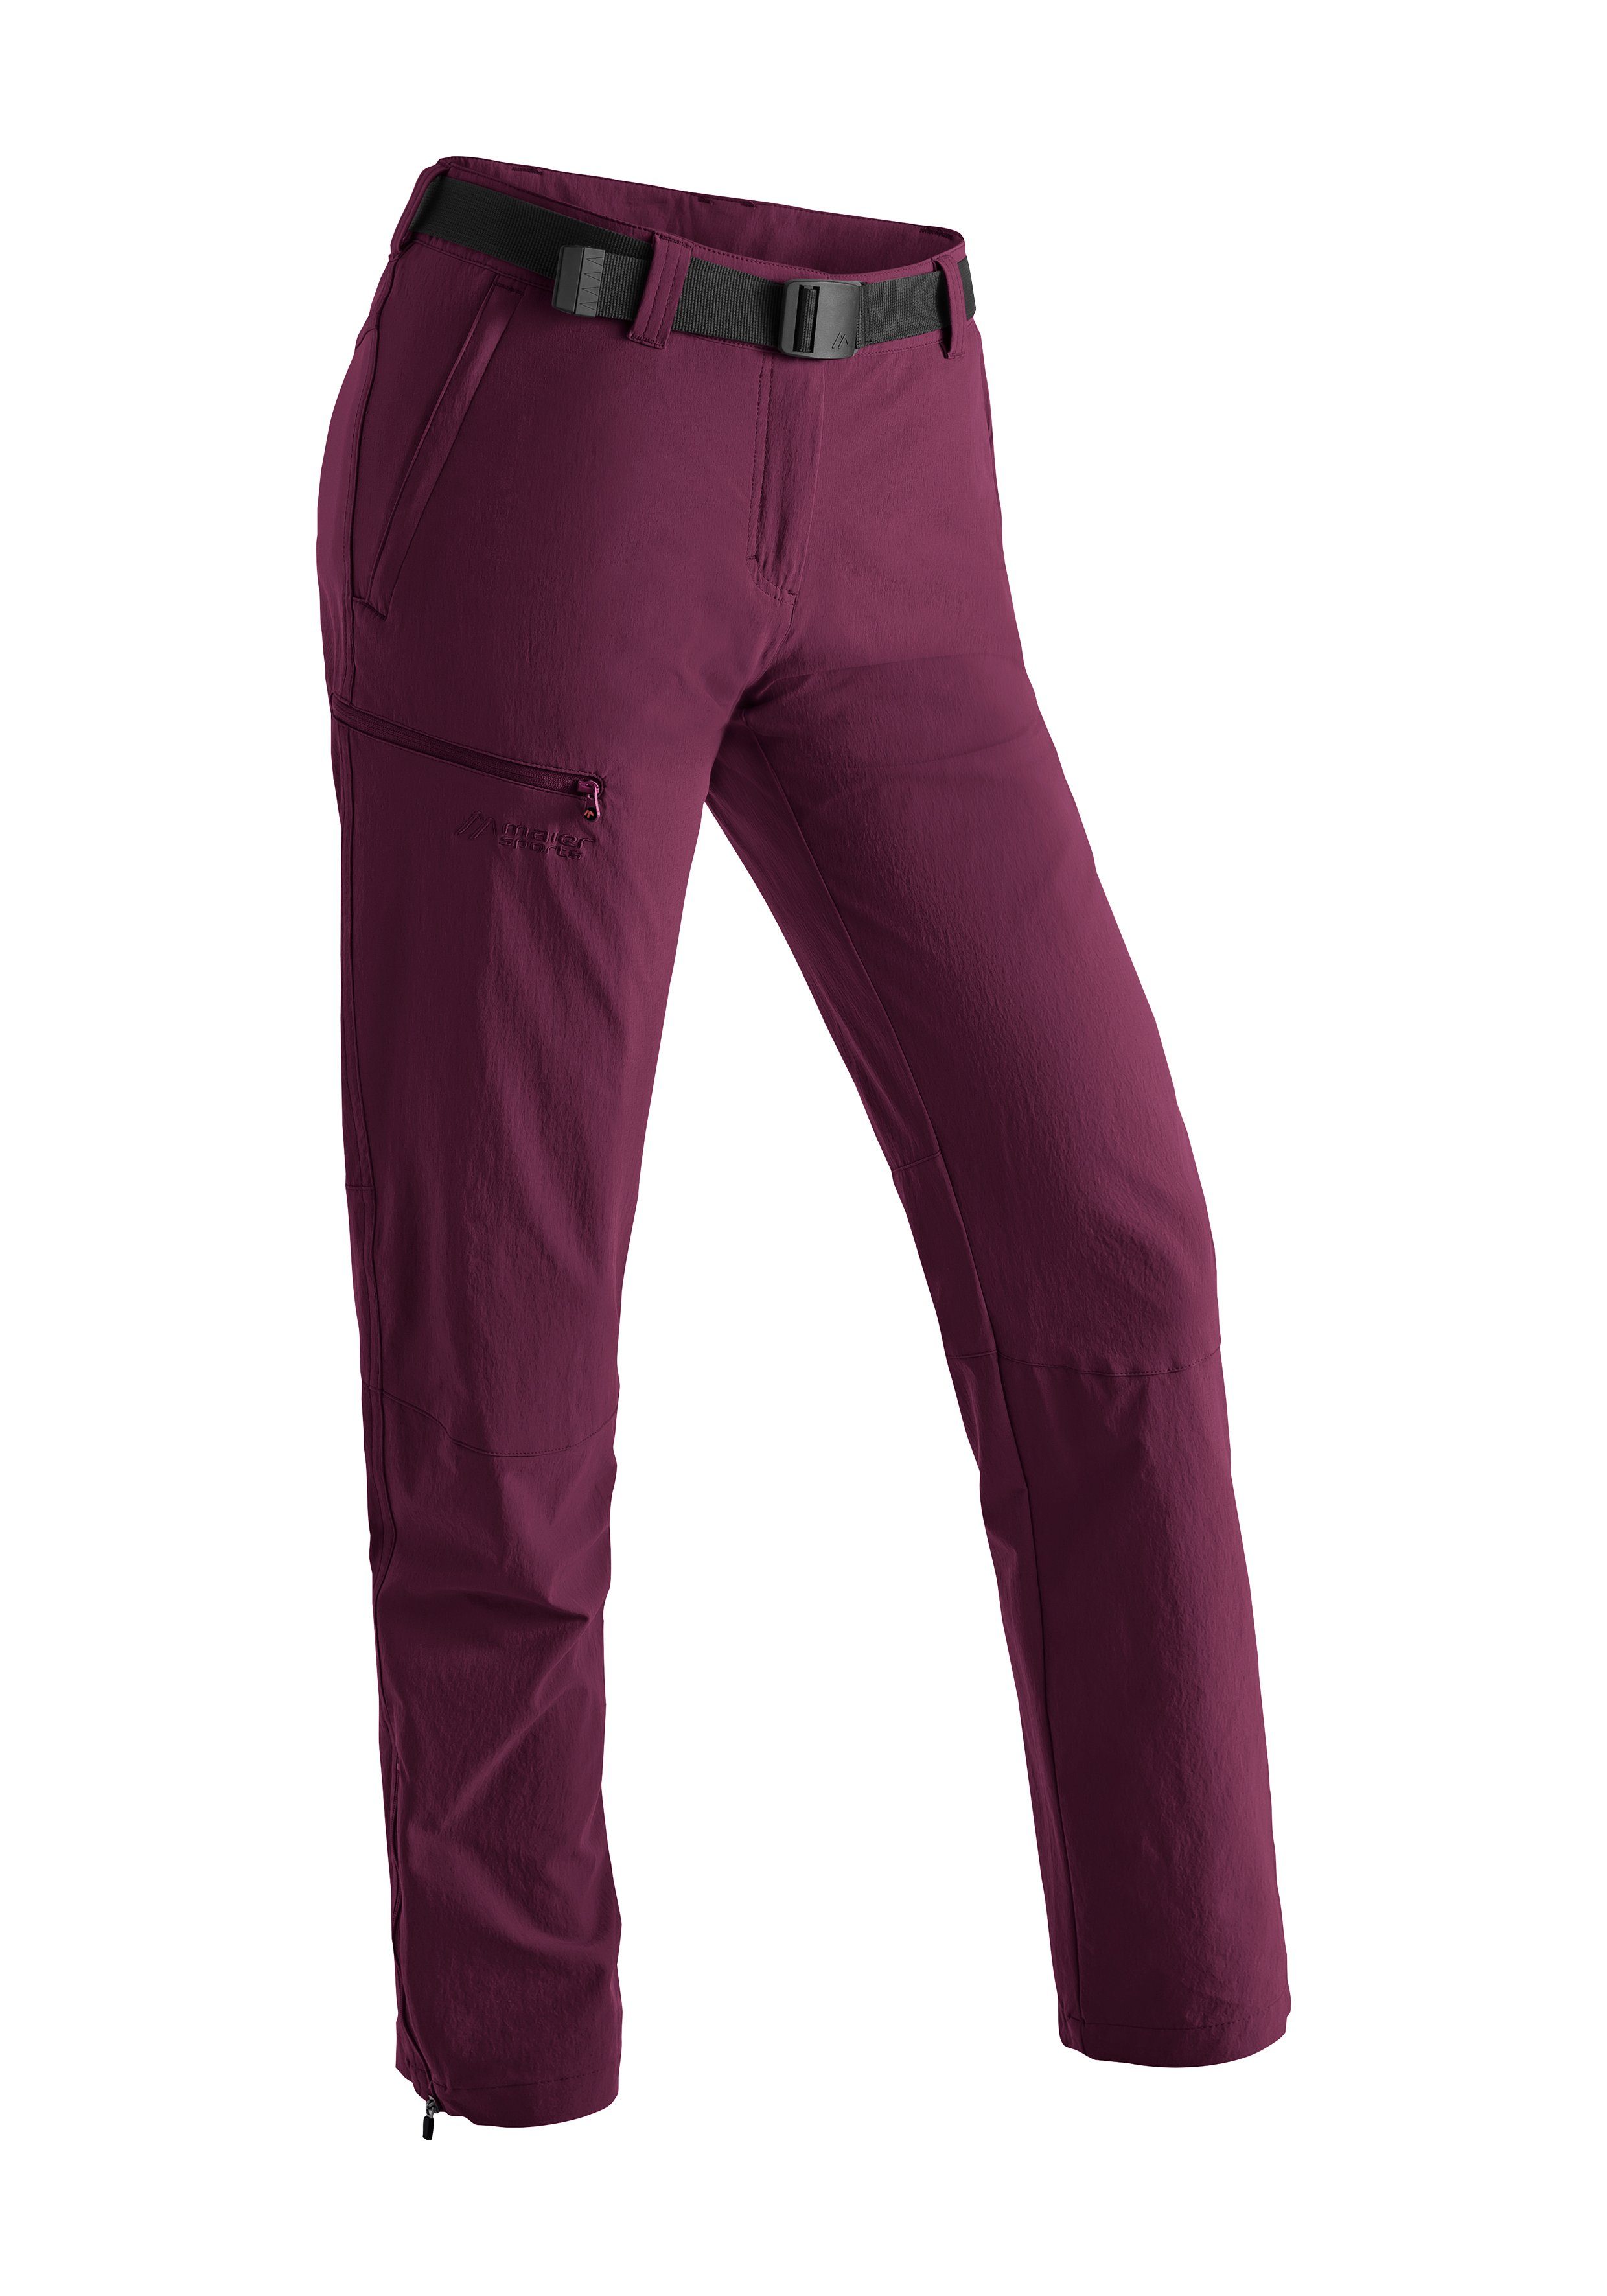 Maier Sports Damen slim aus magenta elastischem Outdoor-Hose Wanderhose, Inara Material Funktionshose